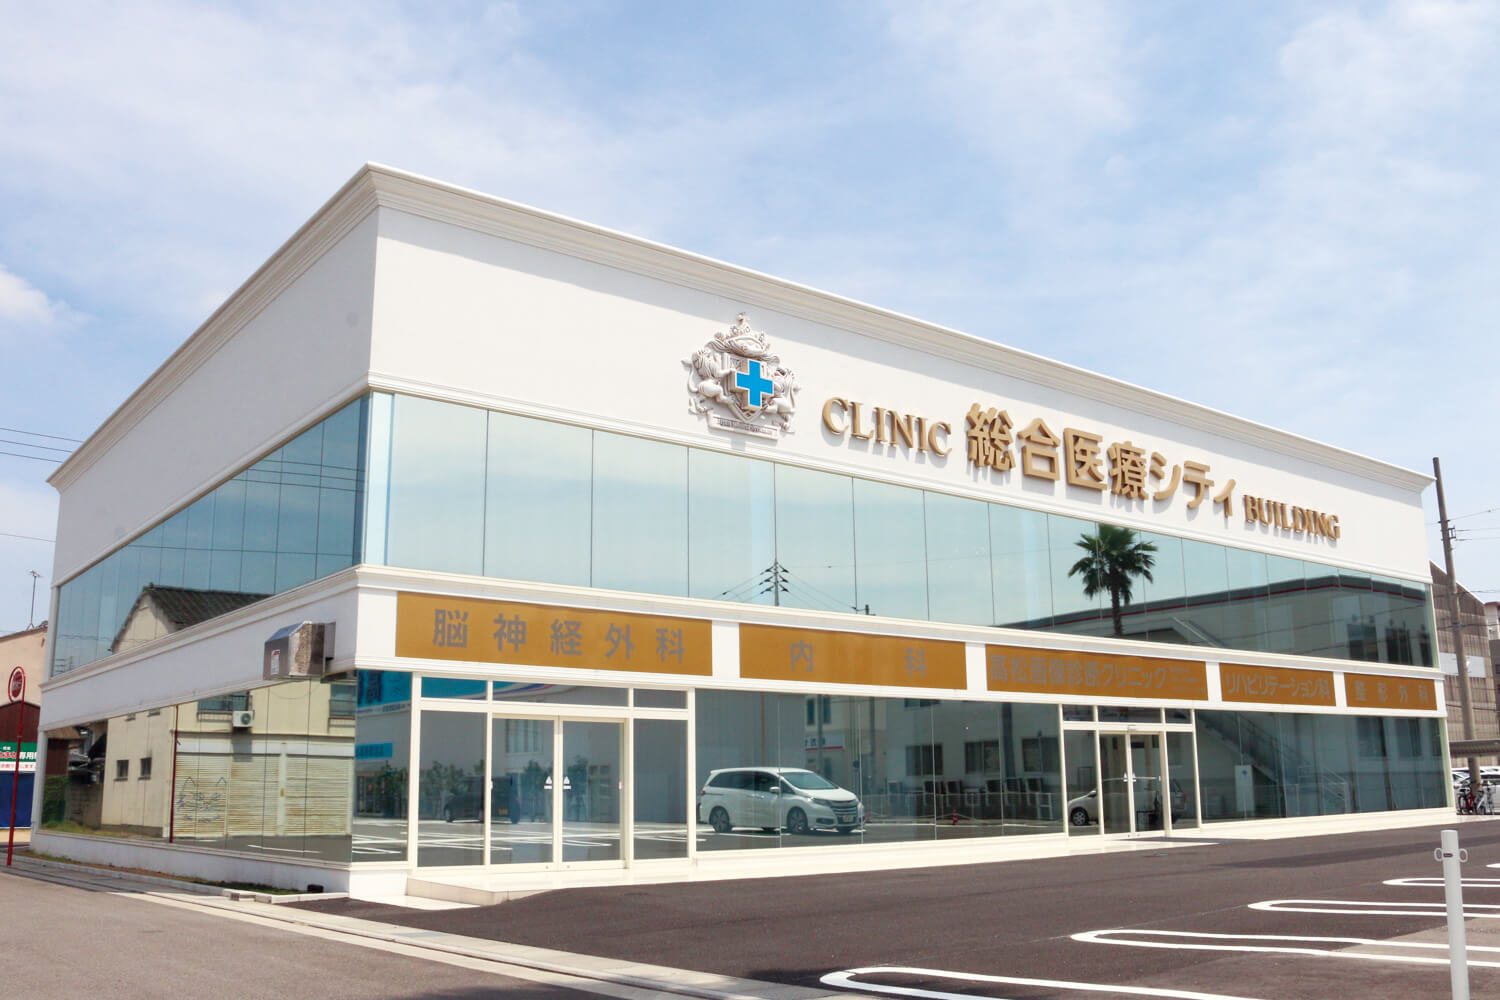 Takamatsu Image Diagnostic Clinic